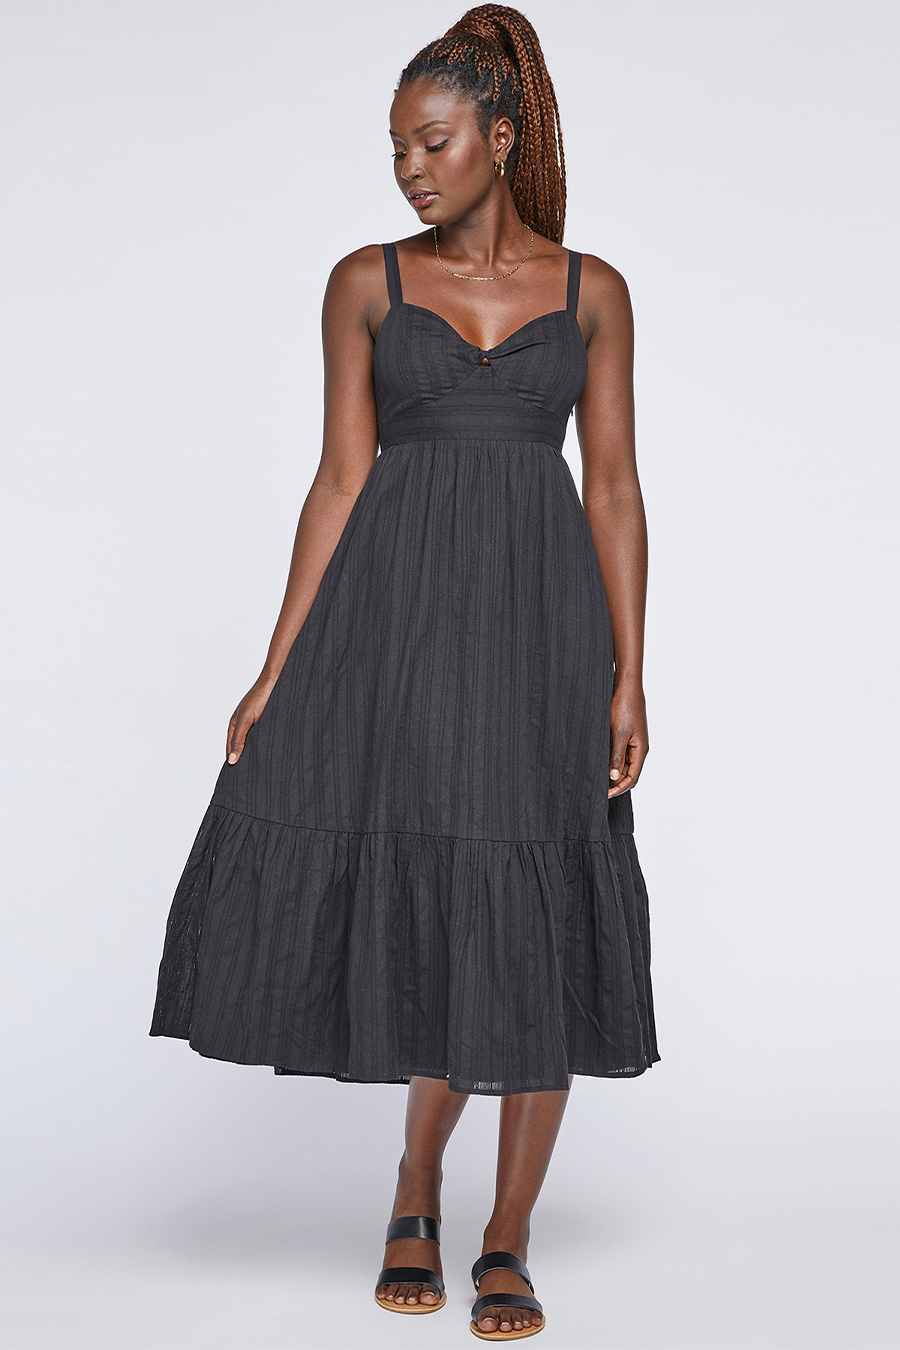 Shae Textured Dress | Black - Main Image Number 1 of 2